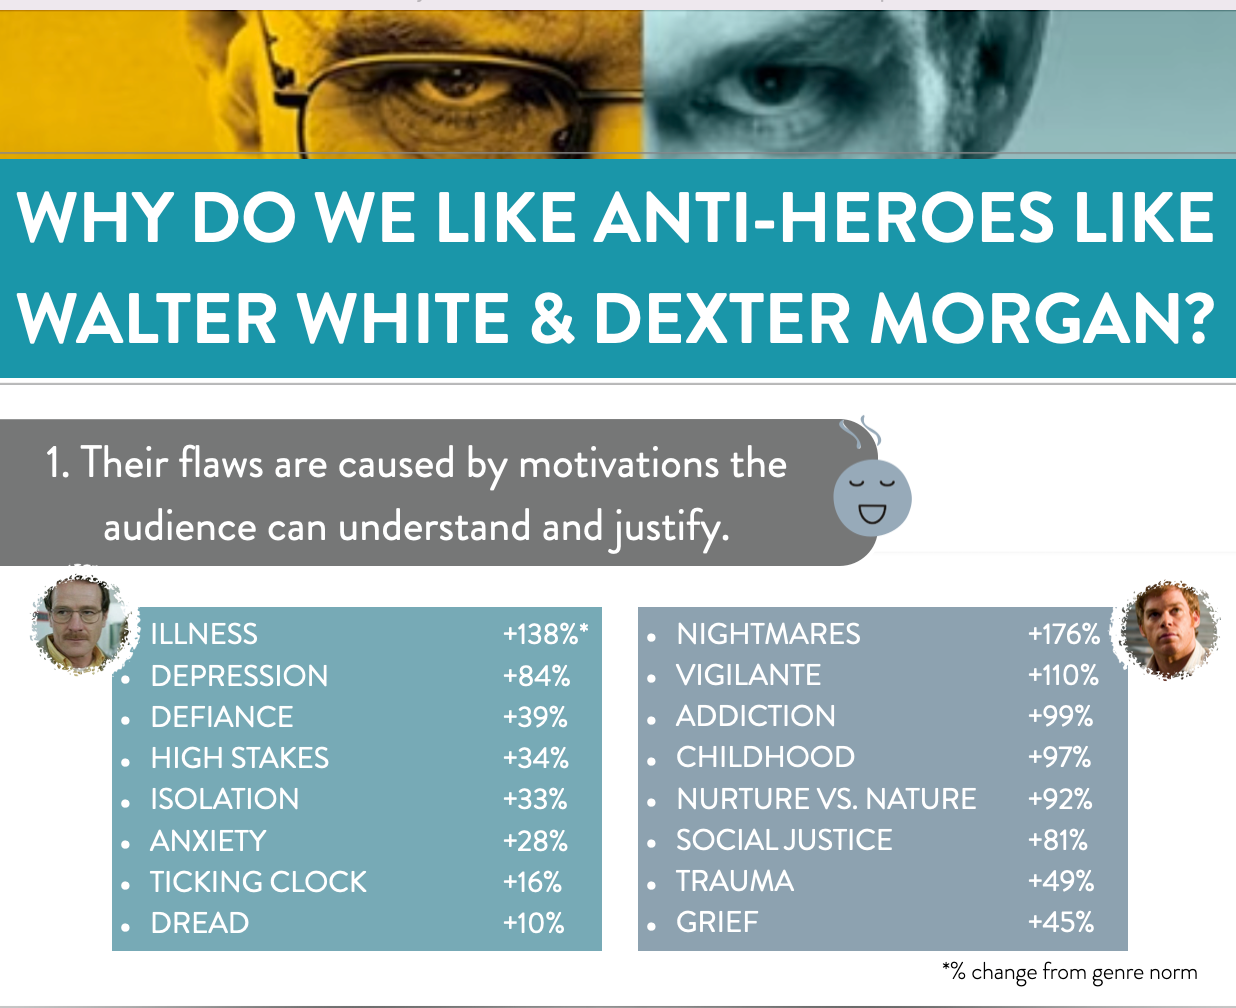 Detailed Character Analysis: Walter White vs. Dexter Morgan